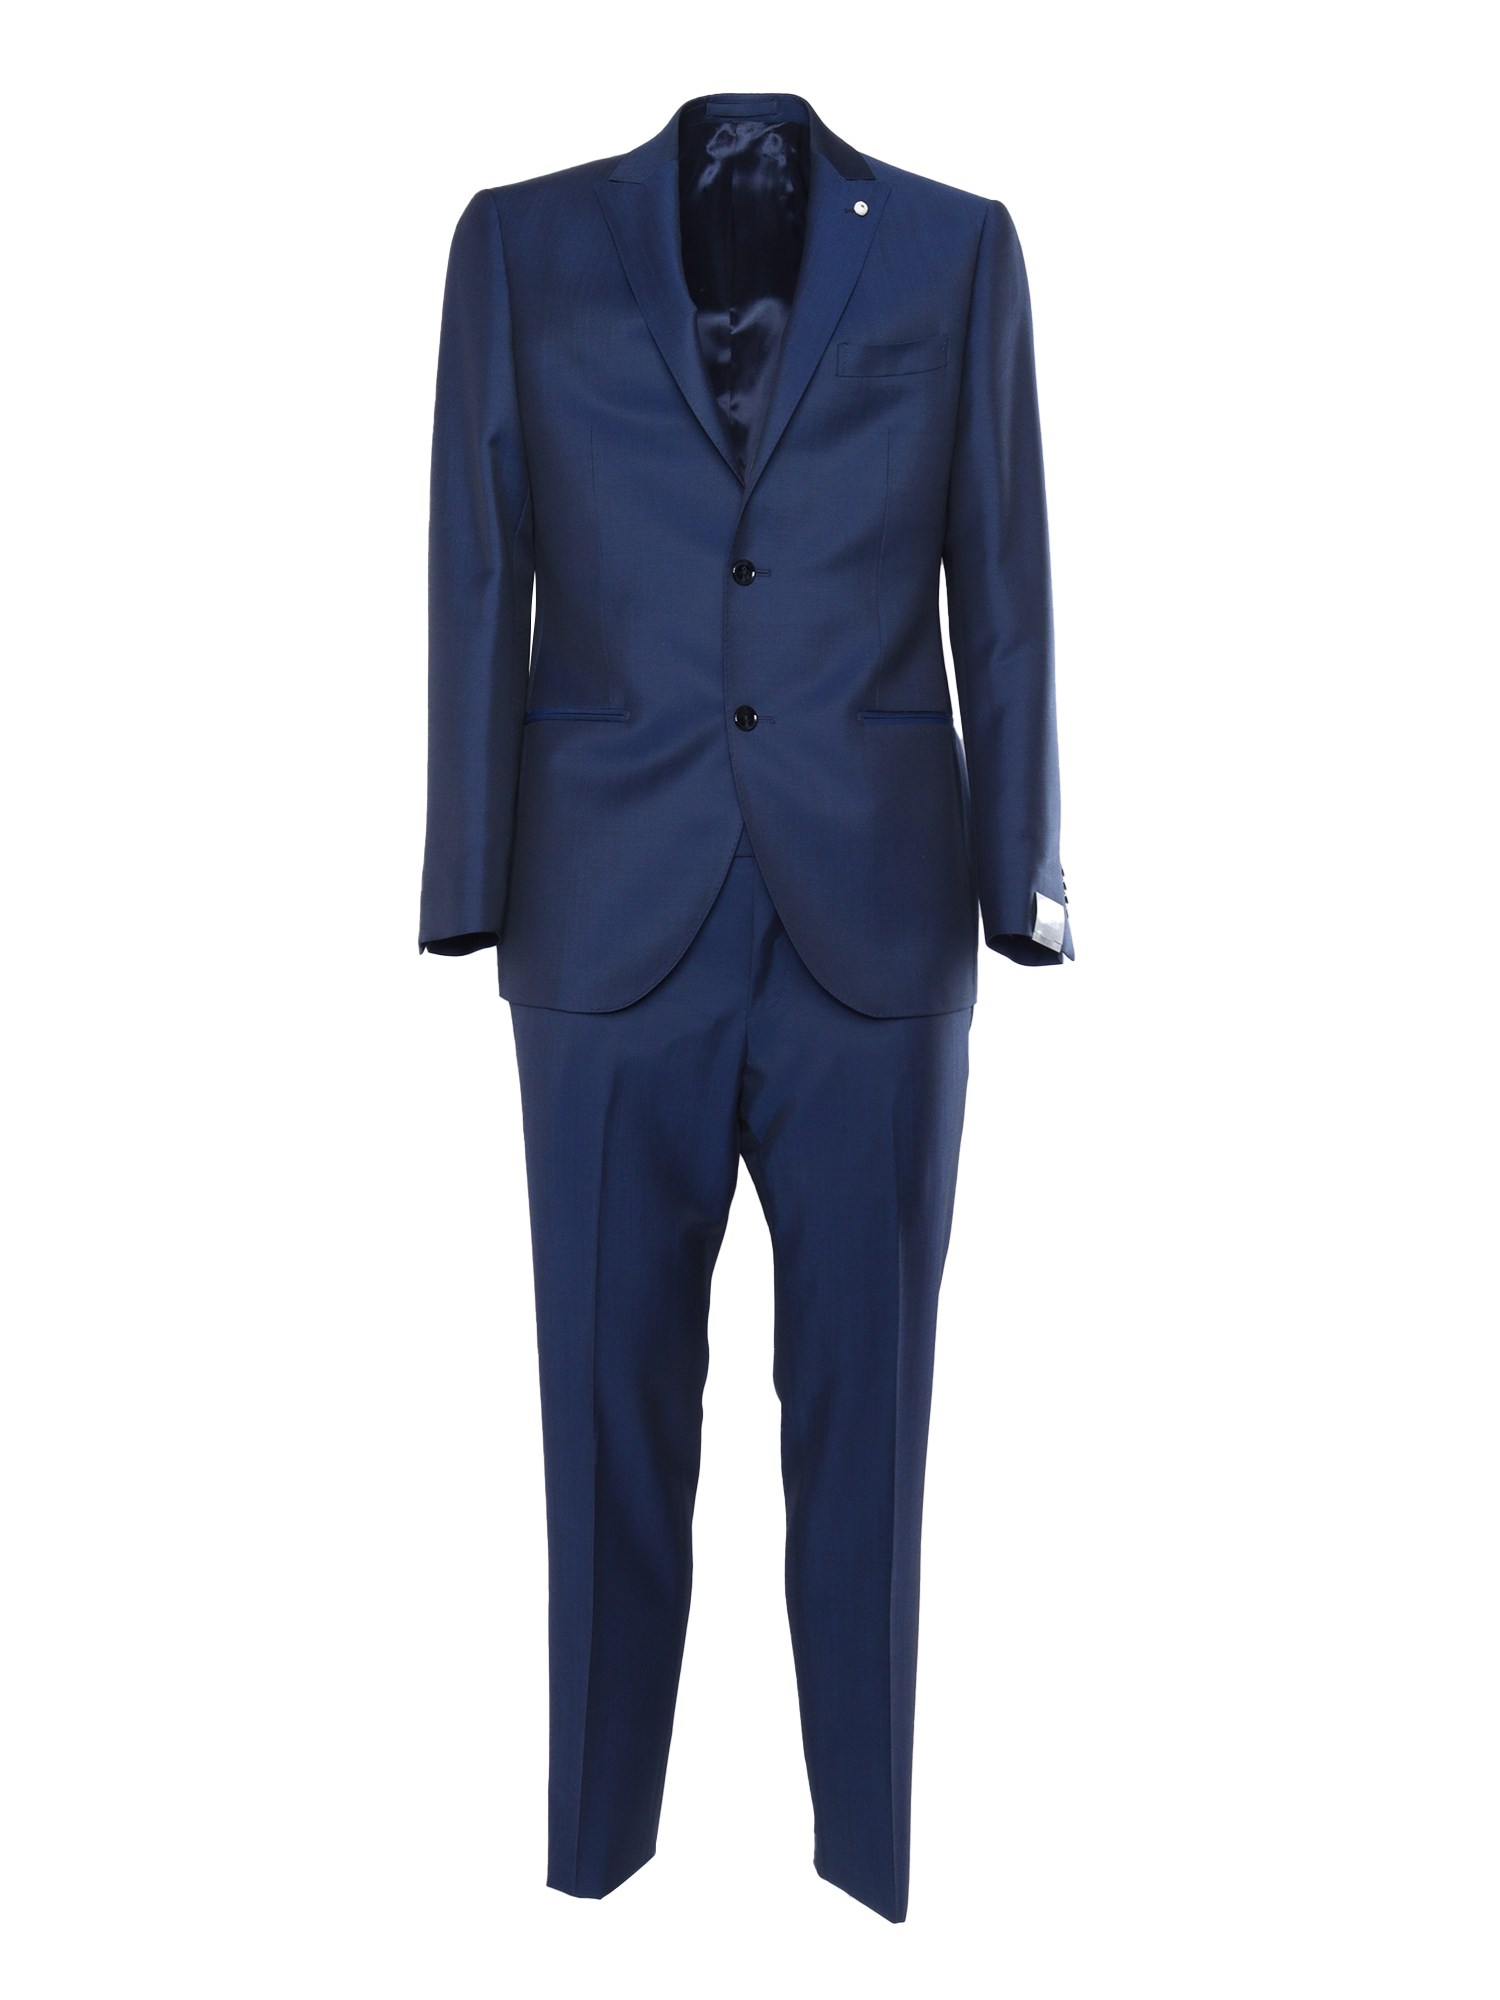 Brando-lubiam 2 Pieces Suit In Blue